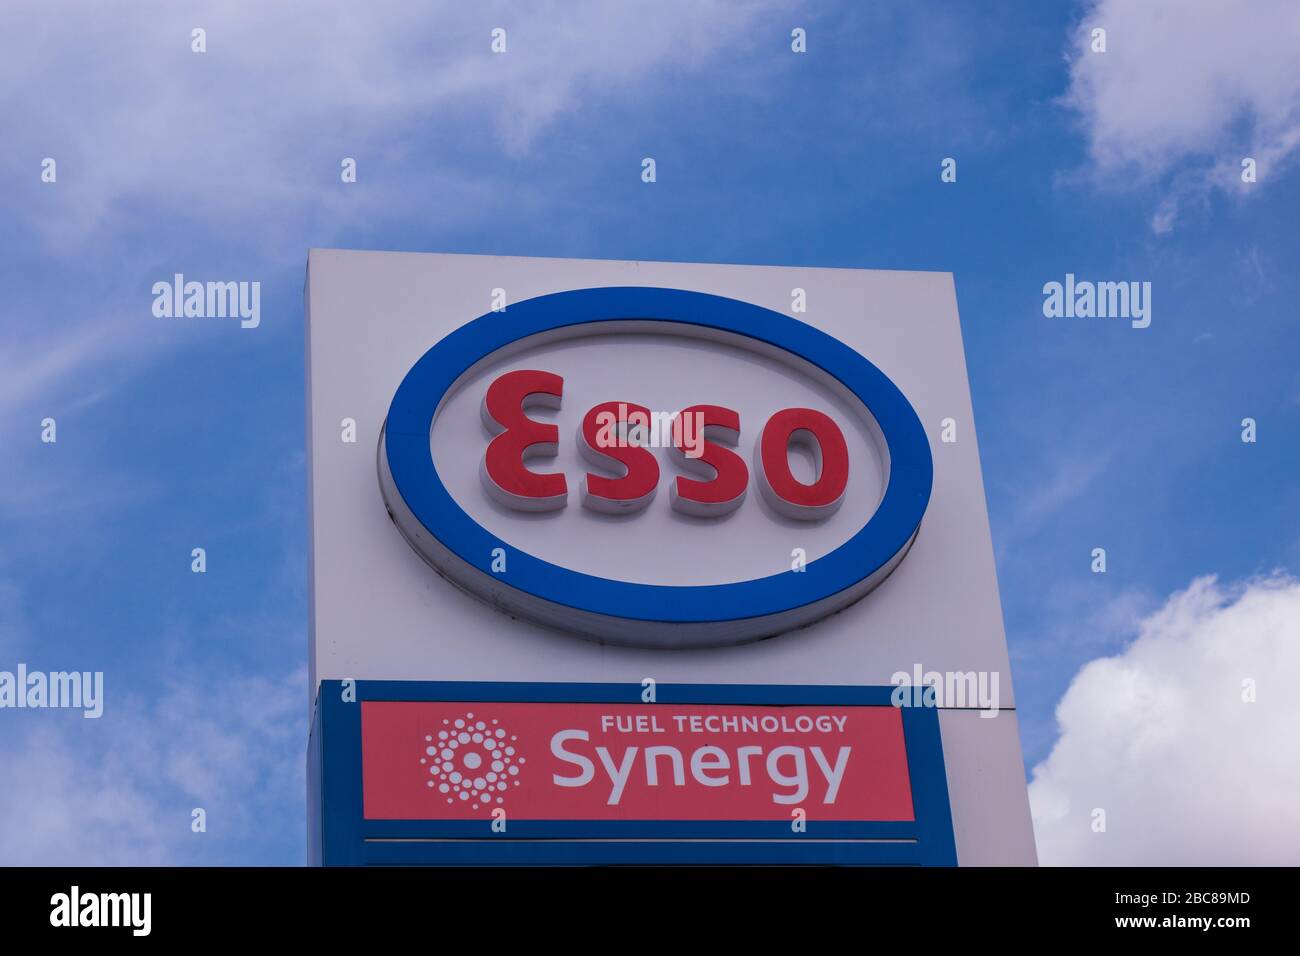 Esso service / Filling station logo - nome commerciale per ExxonMobil - Londra Foto Stock